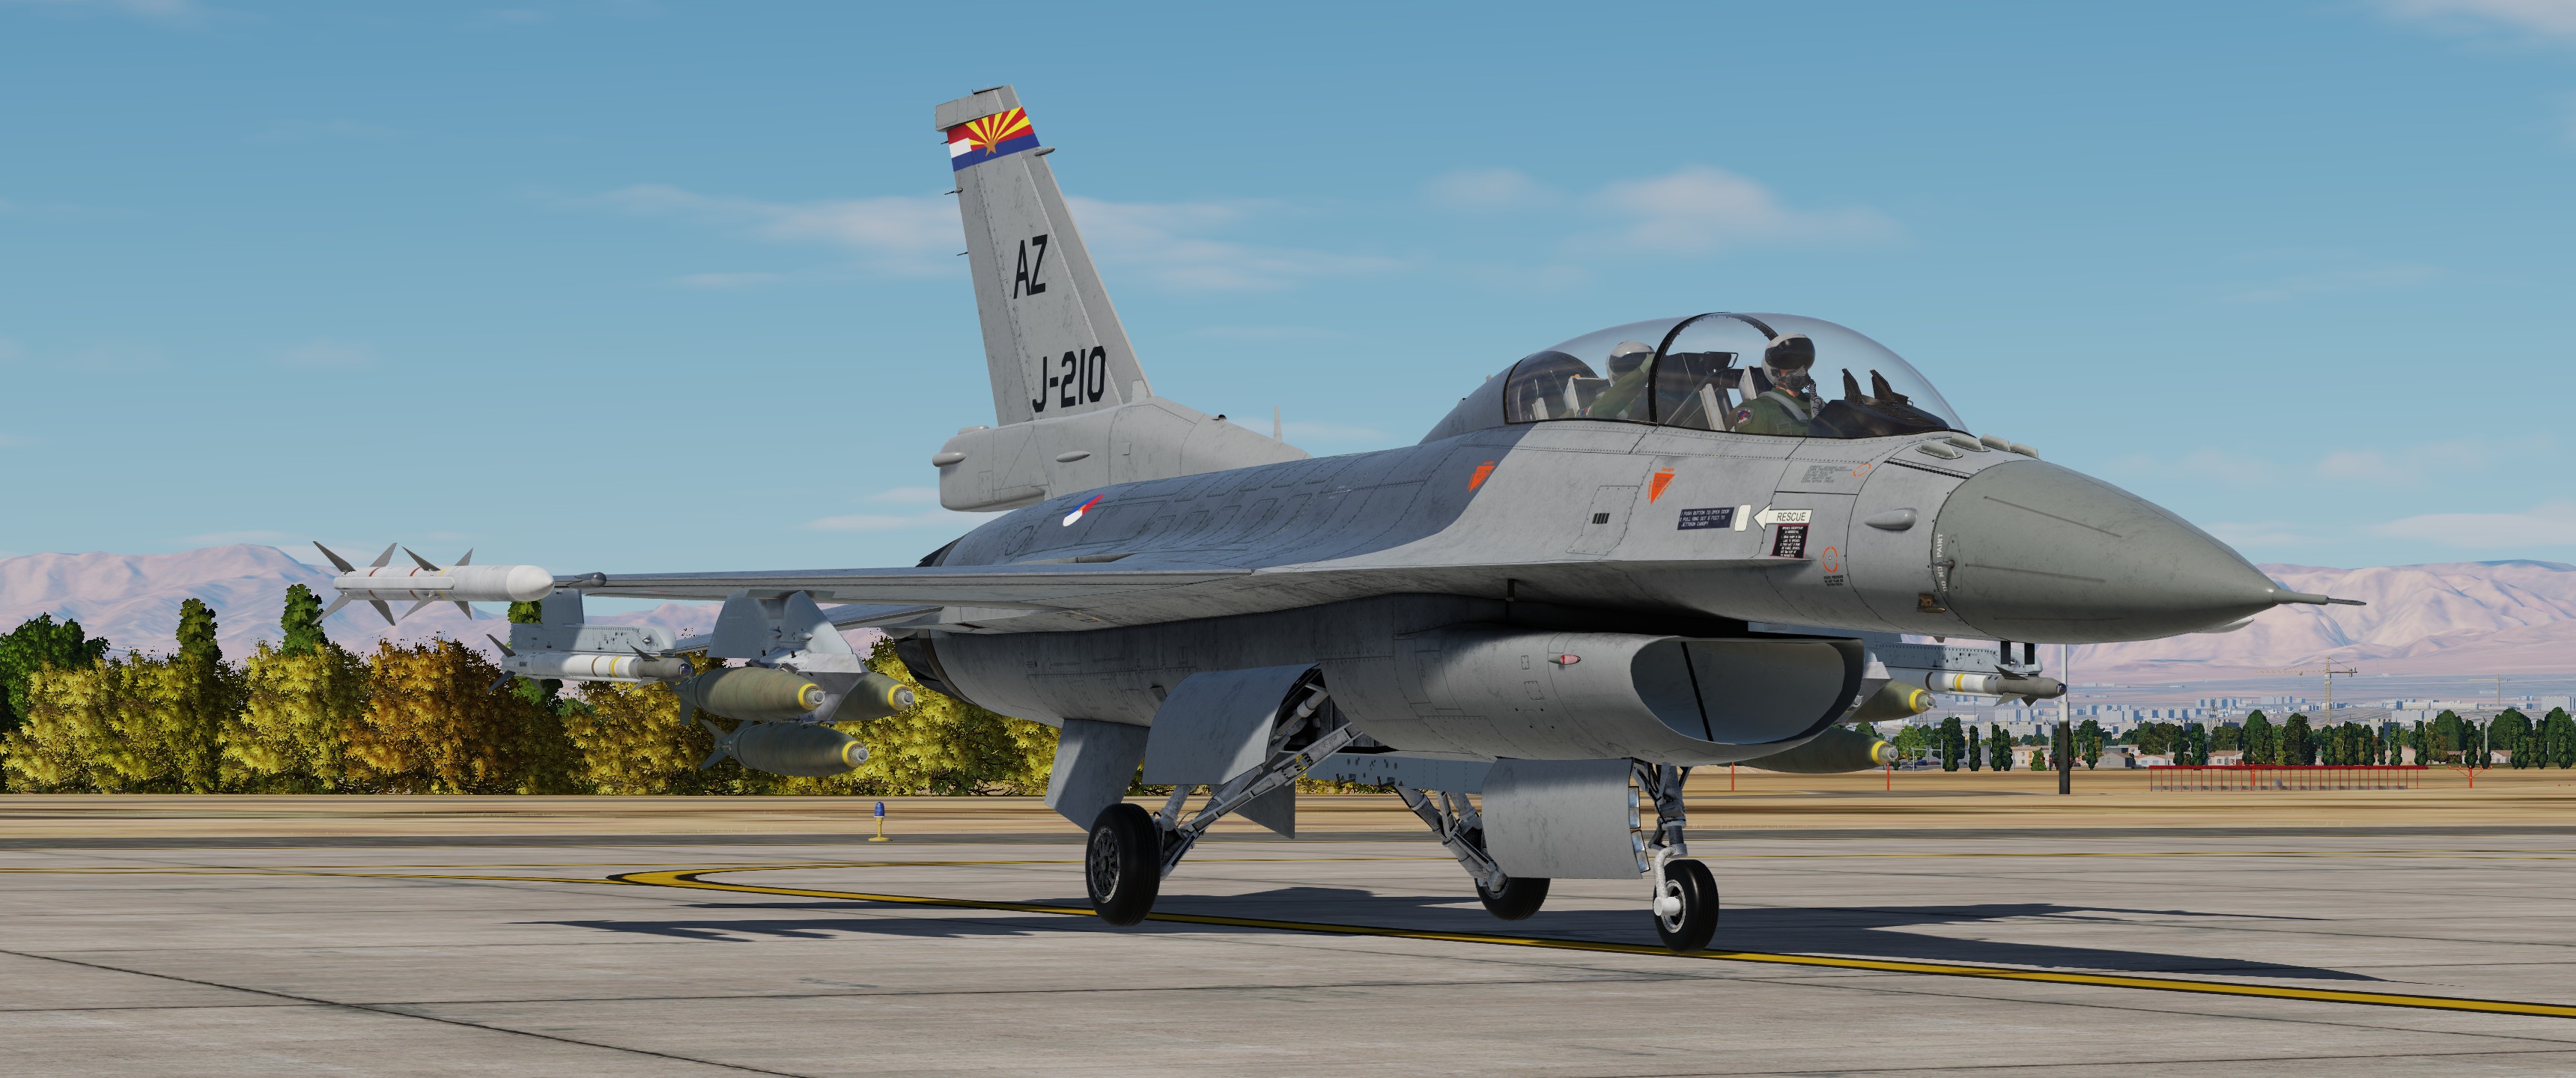 F-16D(BM) Sufa Mod J-210 RNLAF F-16 OCU 148th FS AZ, 162 FW, Arizona ANG, Morris AFB, Tucson.